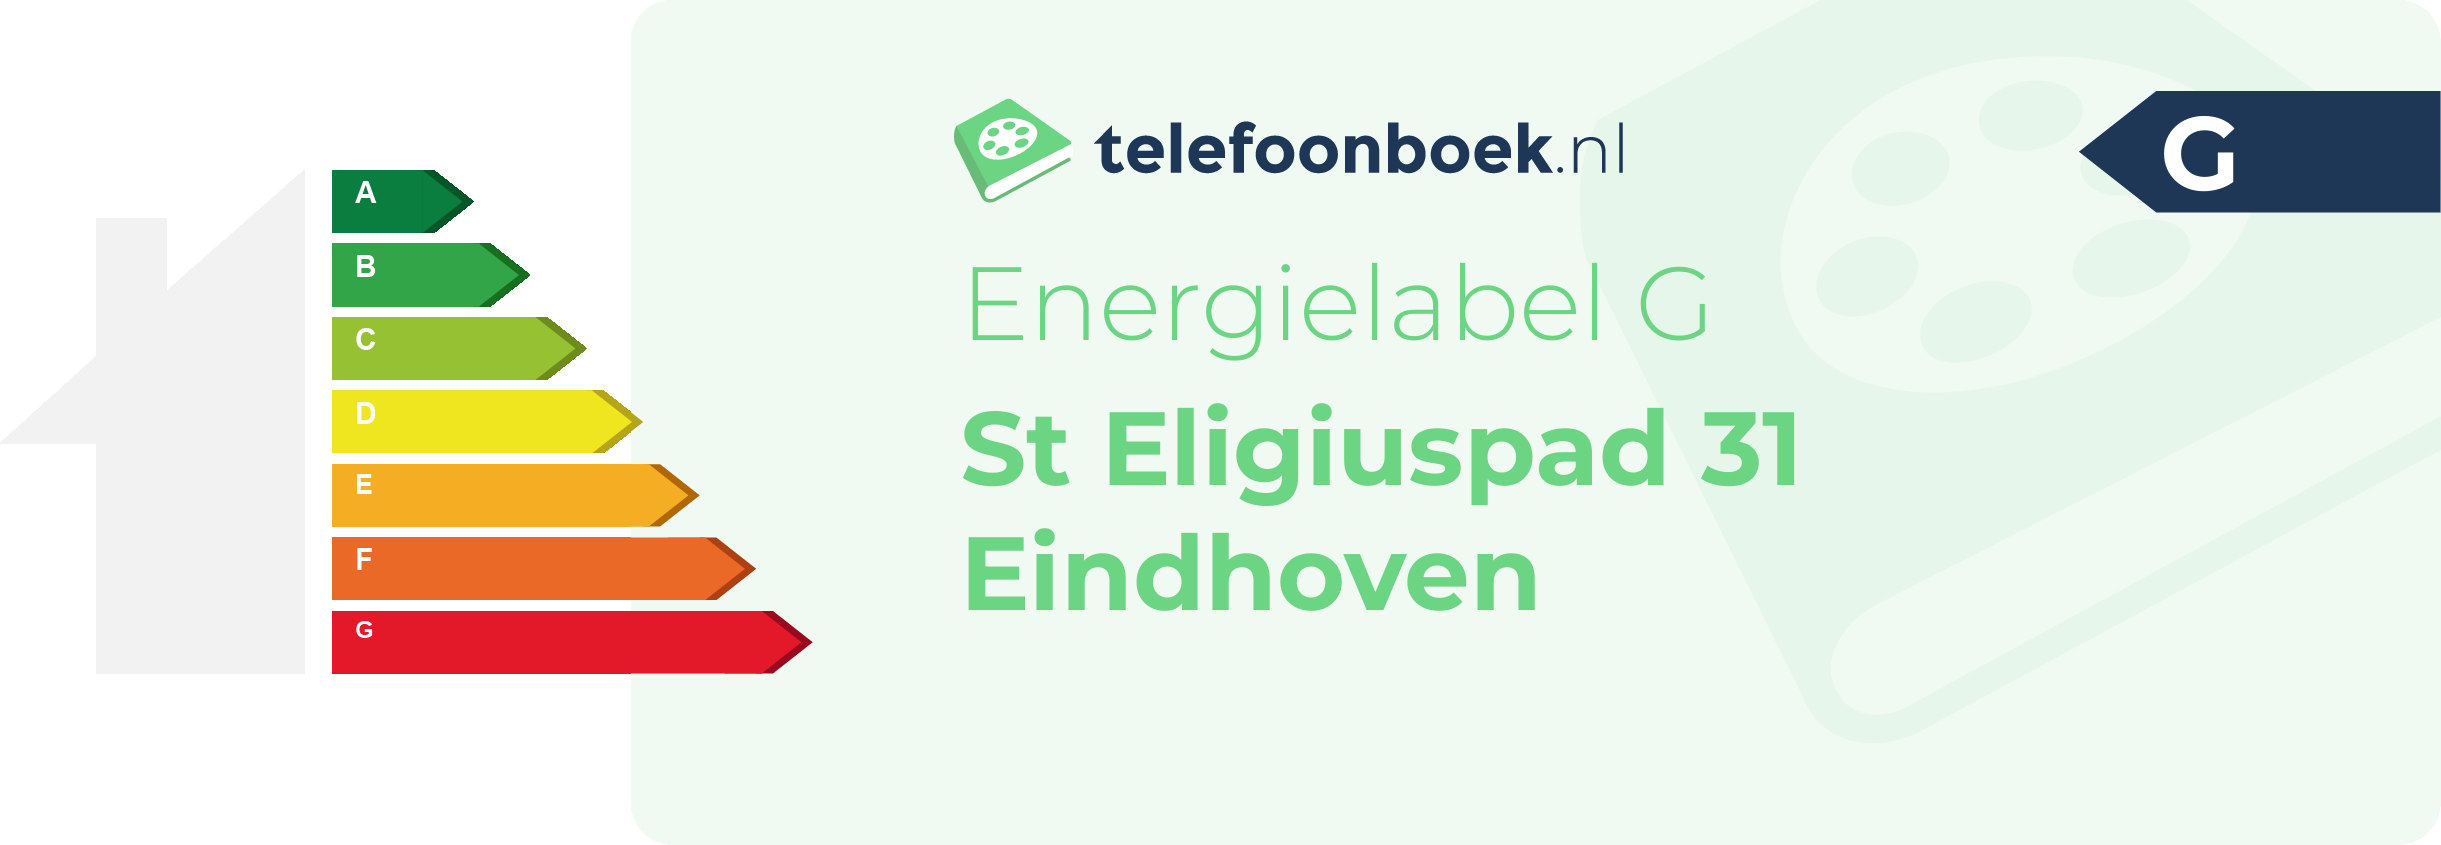 Energielabel St Eligiuspad 31 Eindhoven